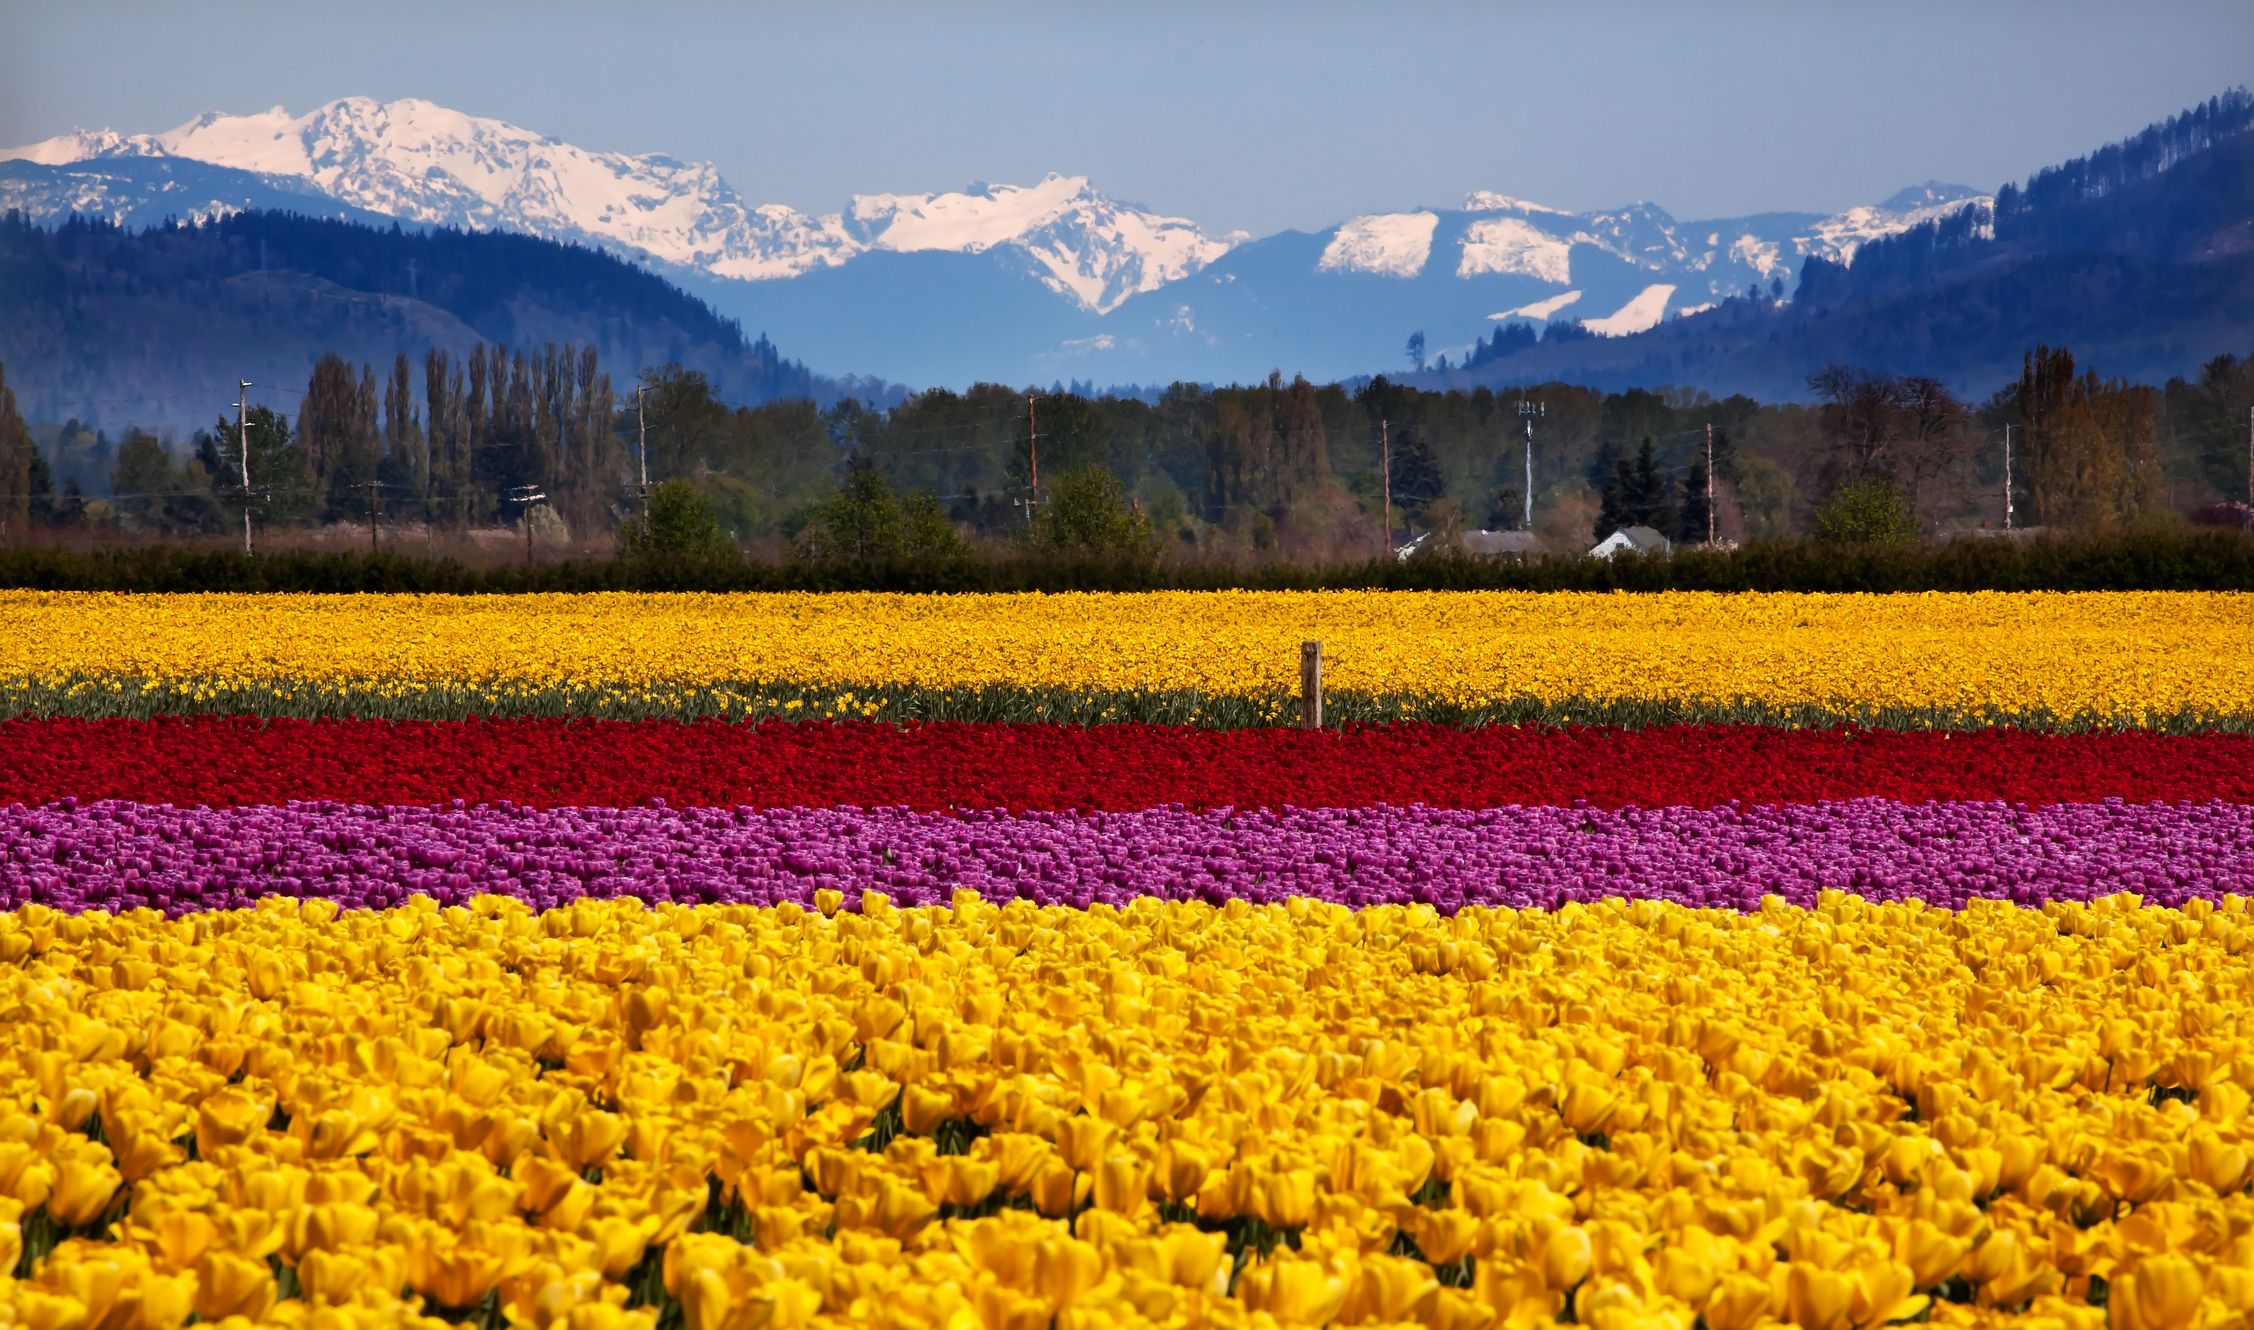 Skagit Valley Tulip Fields & Festival of Washington, U.S.